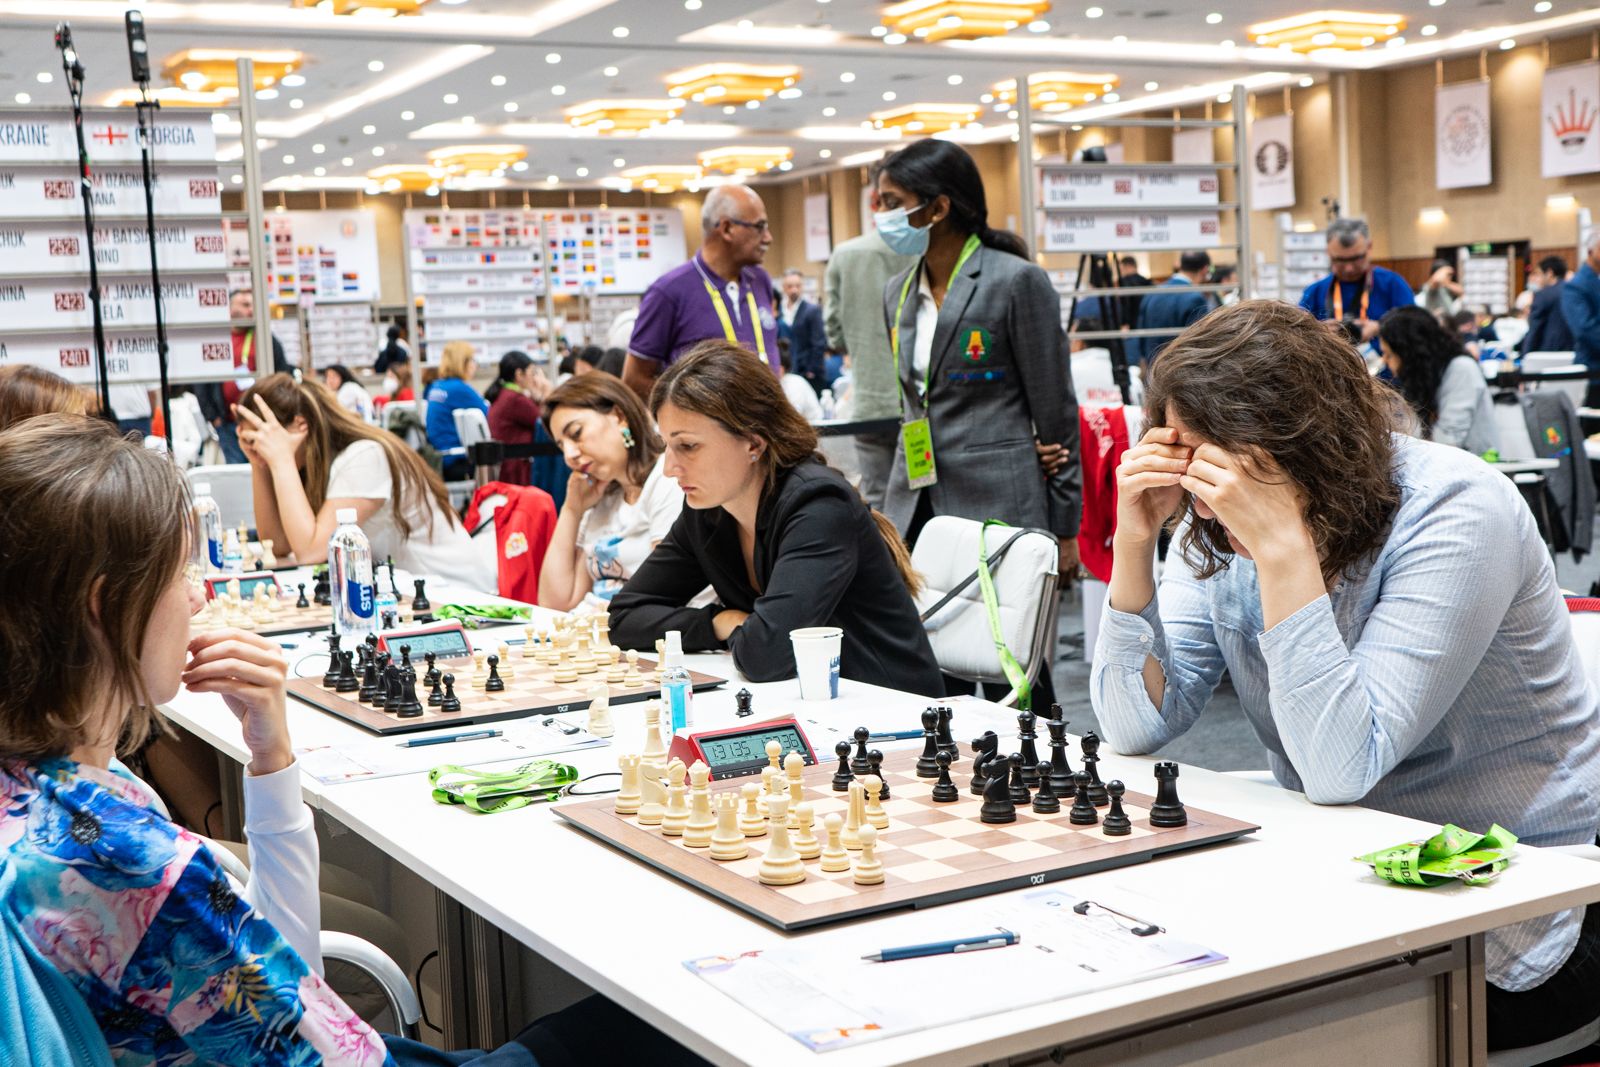 Chess Olympiad: Oliwia Kiolbasa Keeps 9/9 Winning Scores As Poland Defeats  India 1 Women Team - News18